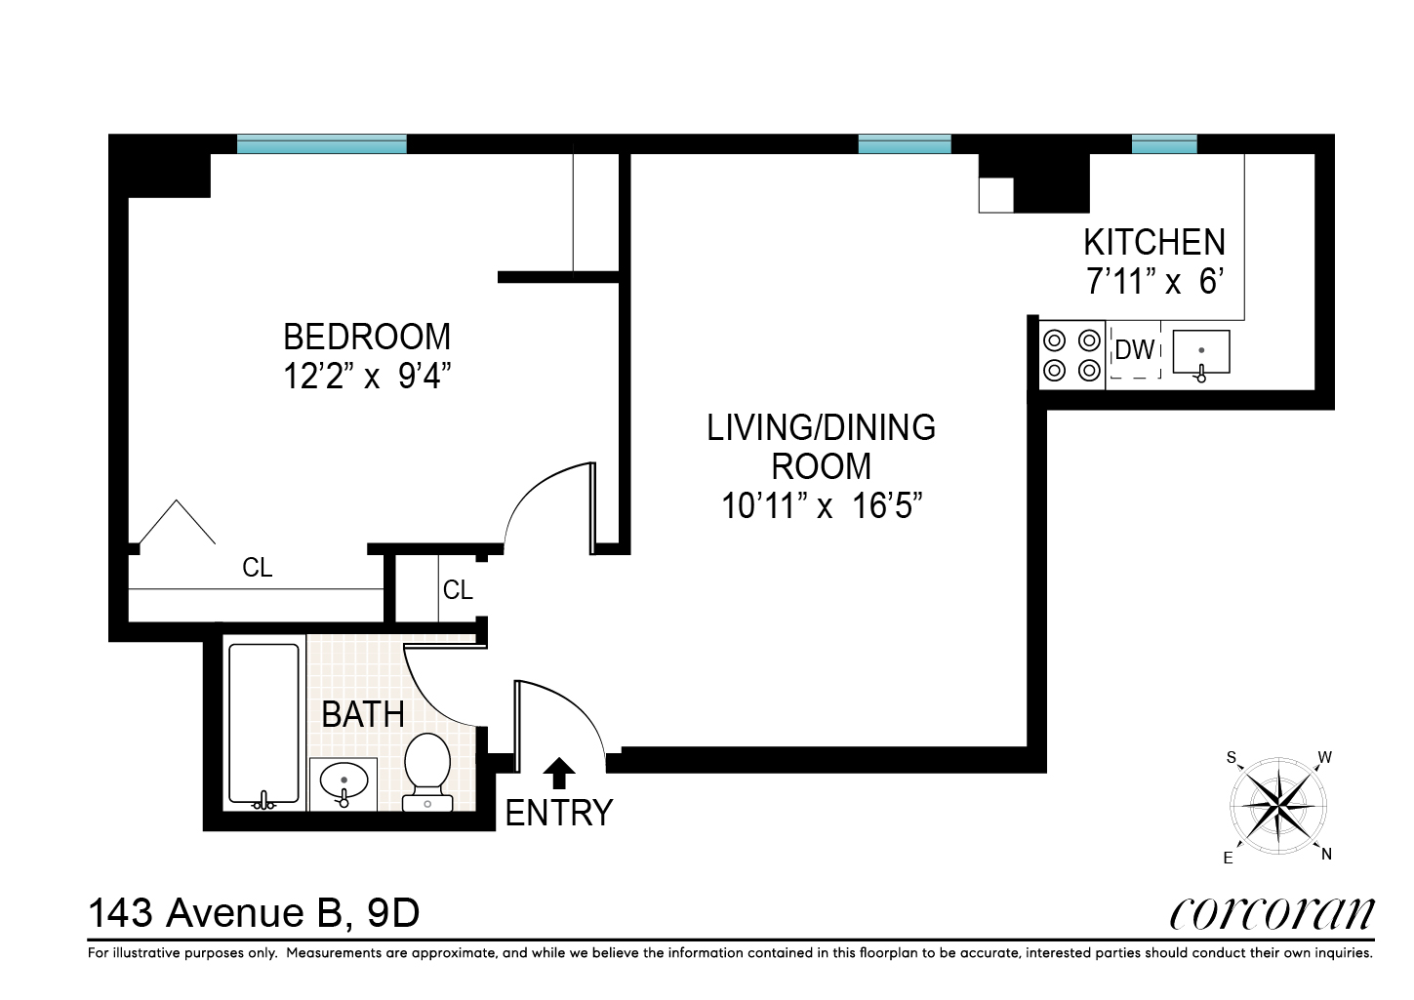 Floorplan for 143 Ave B, 9D